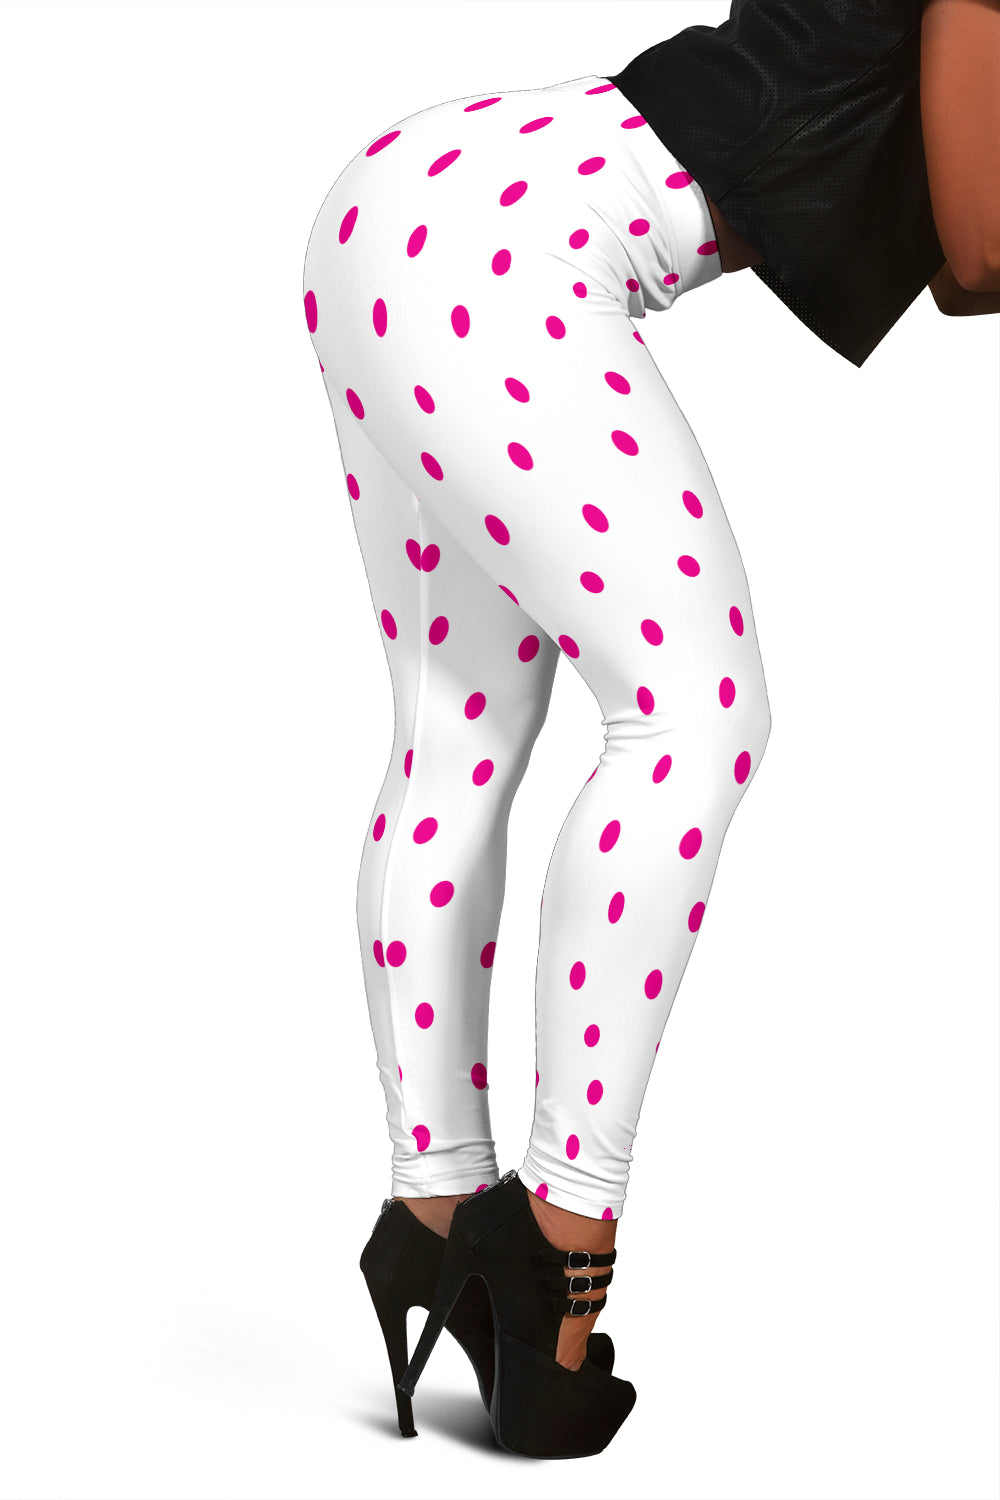 Hoodies4you "Look like Barbie" "Halloween White Leggings w/pink Polka Dots